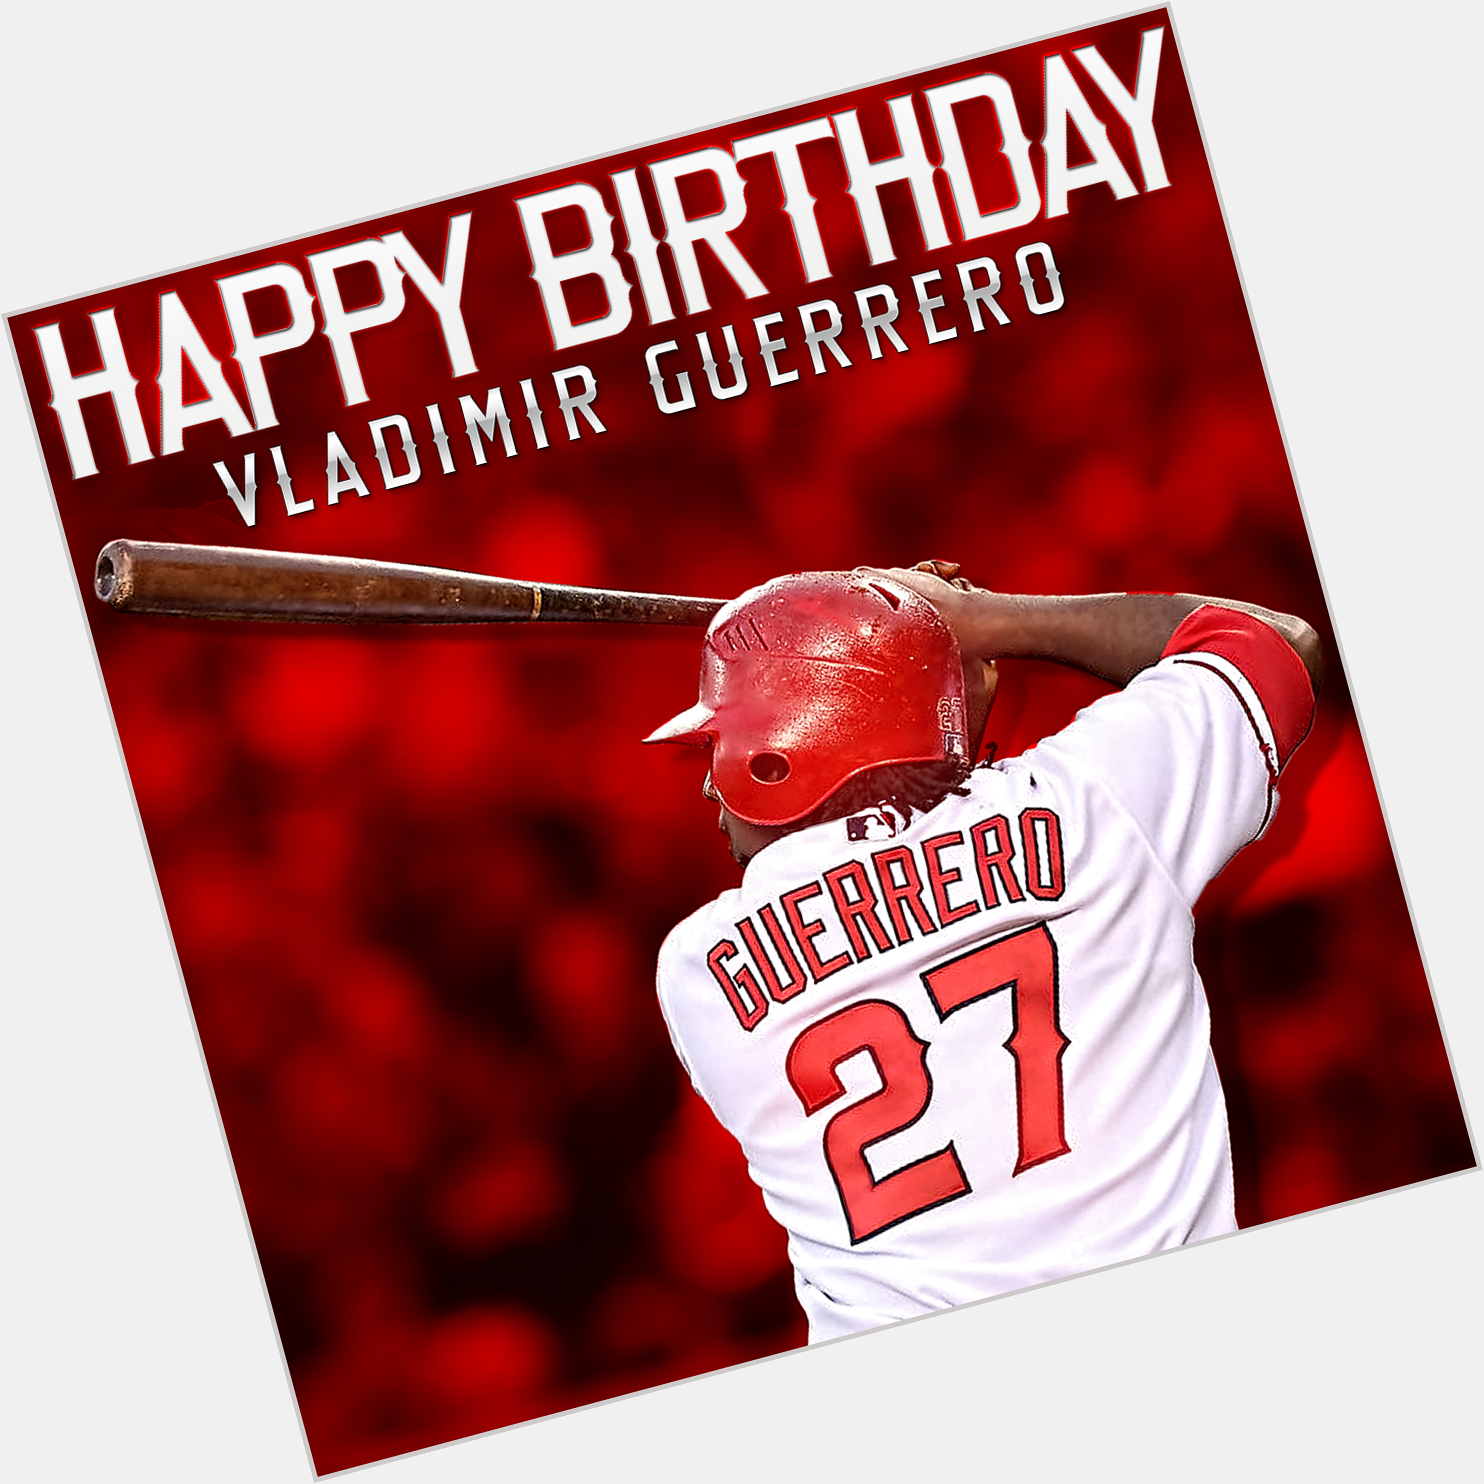 Happy 40th birthday to nine-time All-Star Vladimir Guerrero. 